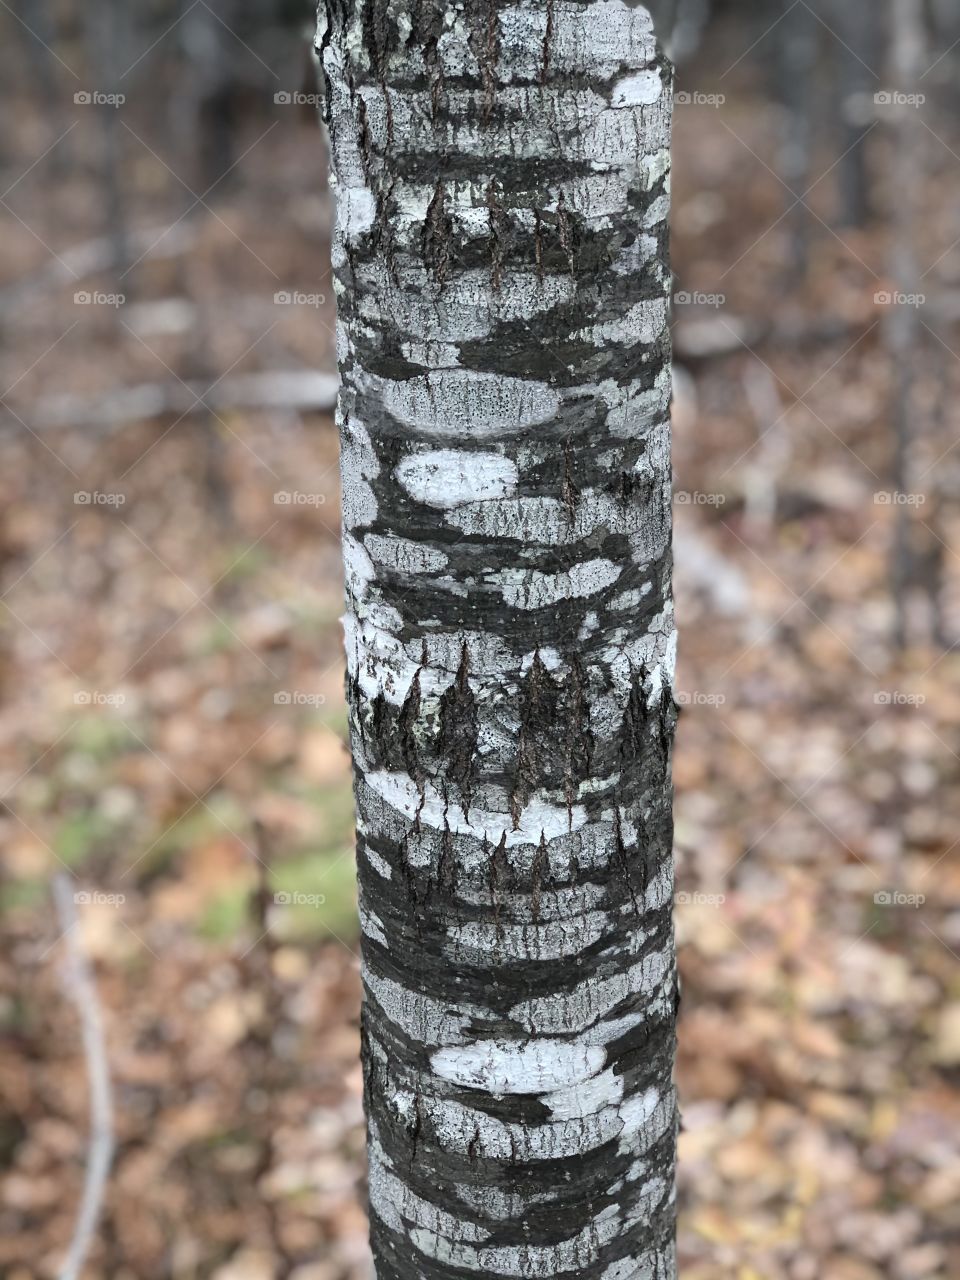 Striped tree trunk